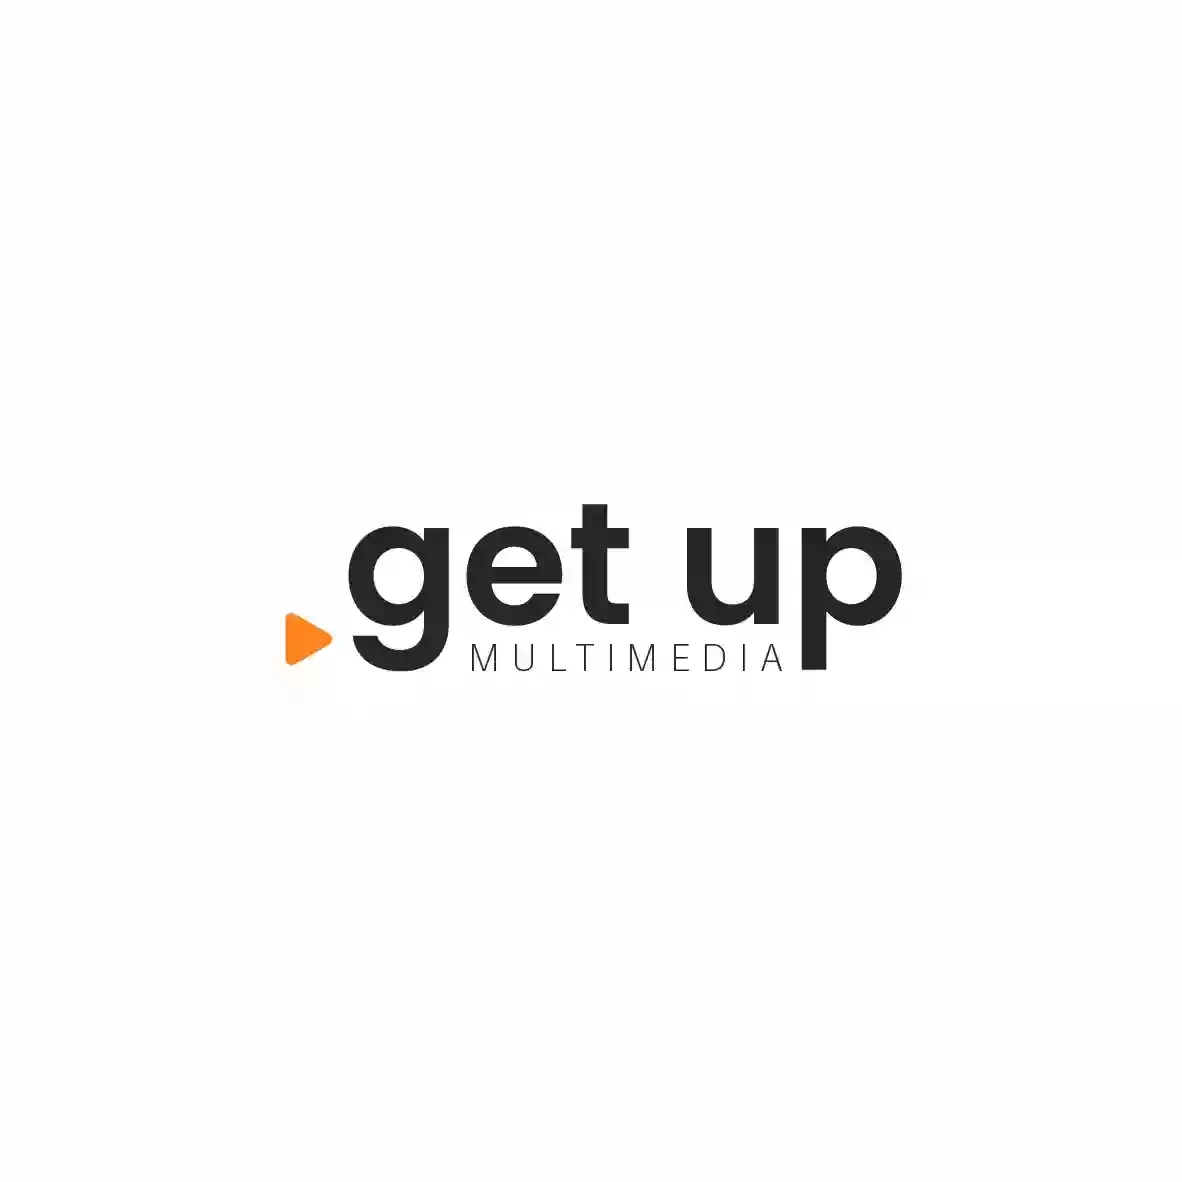 Get Up Multimedia